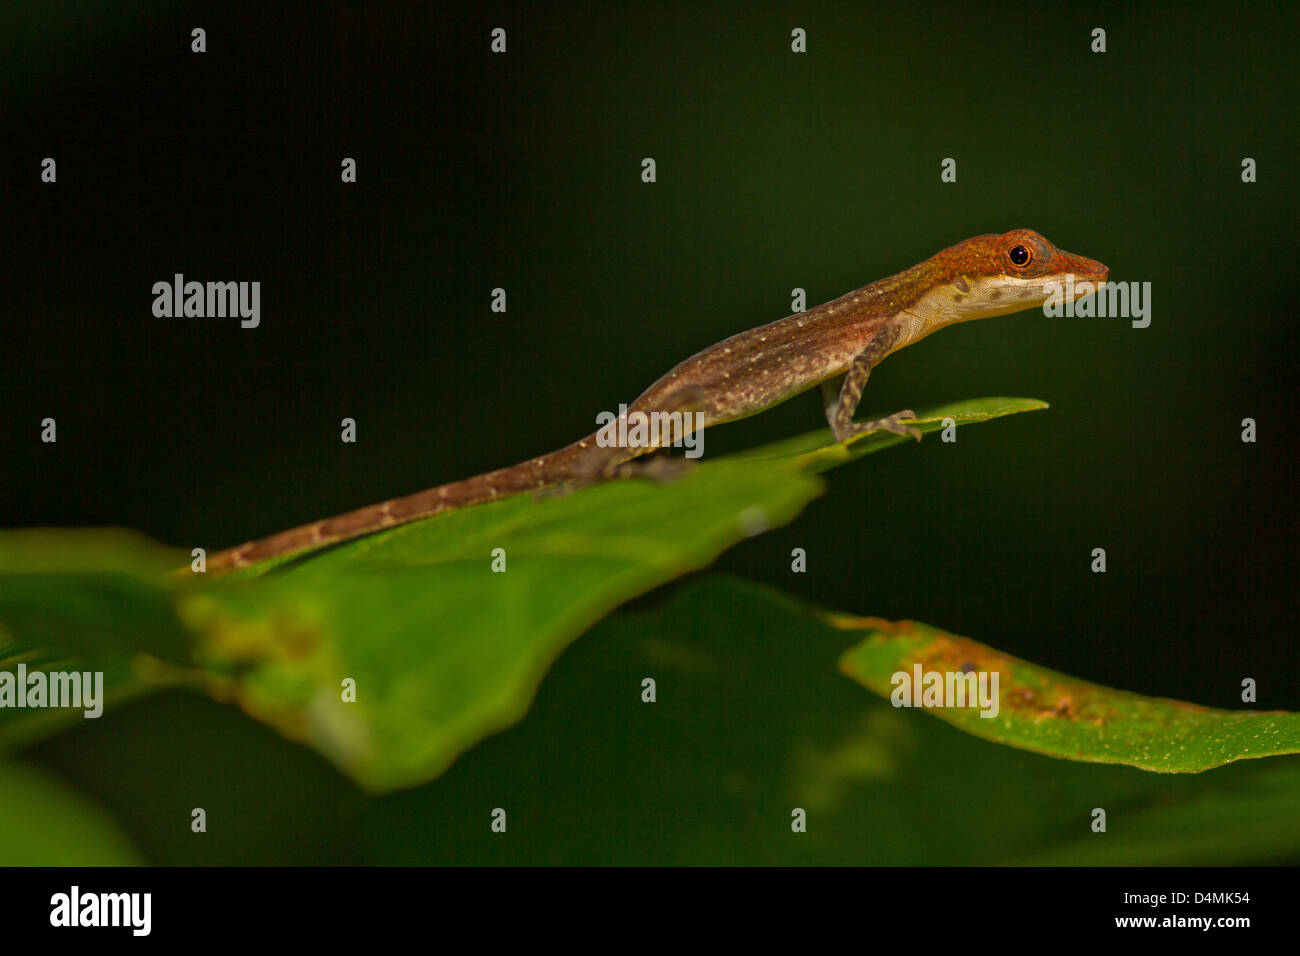 Lizard on a leaf Stock Photo